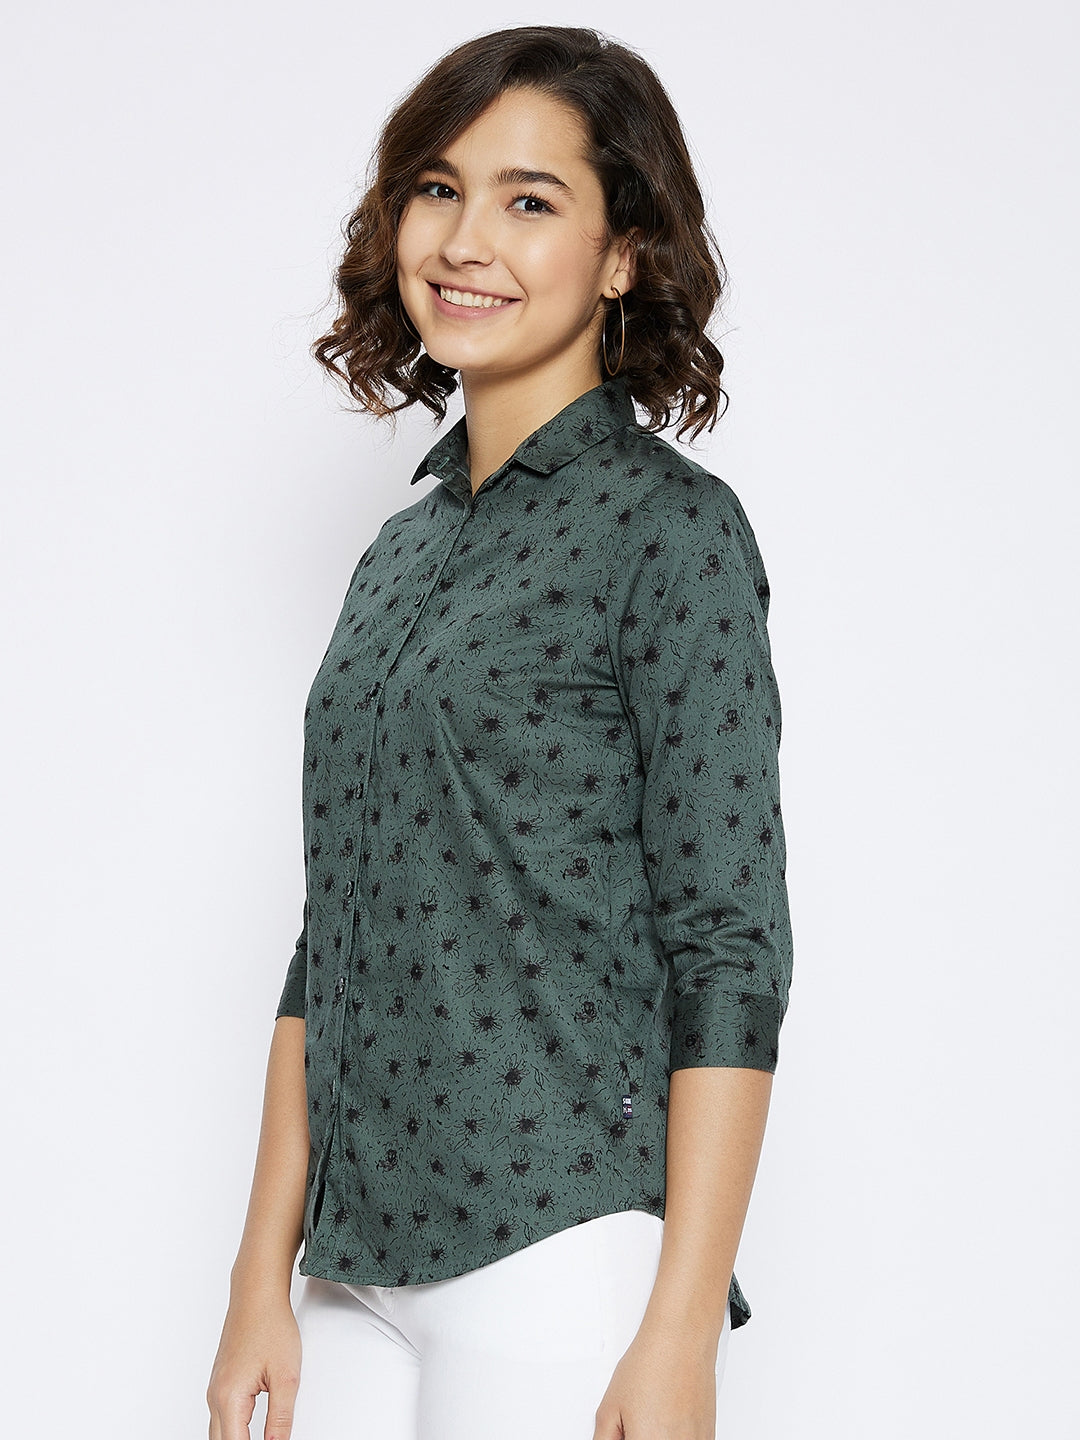 Green Floral Printed Slim Fit shirt - Women Shirts